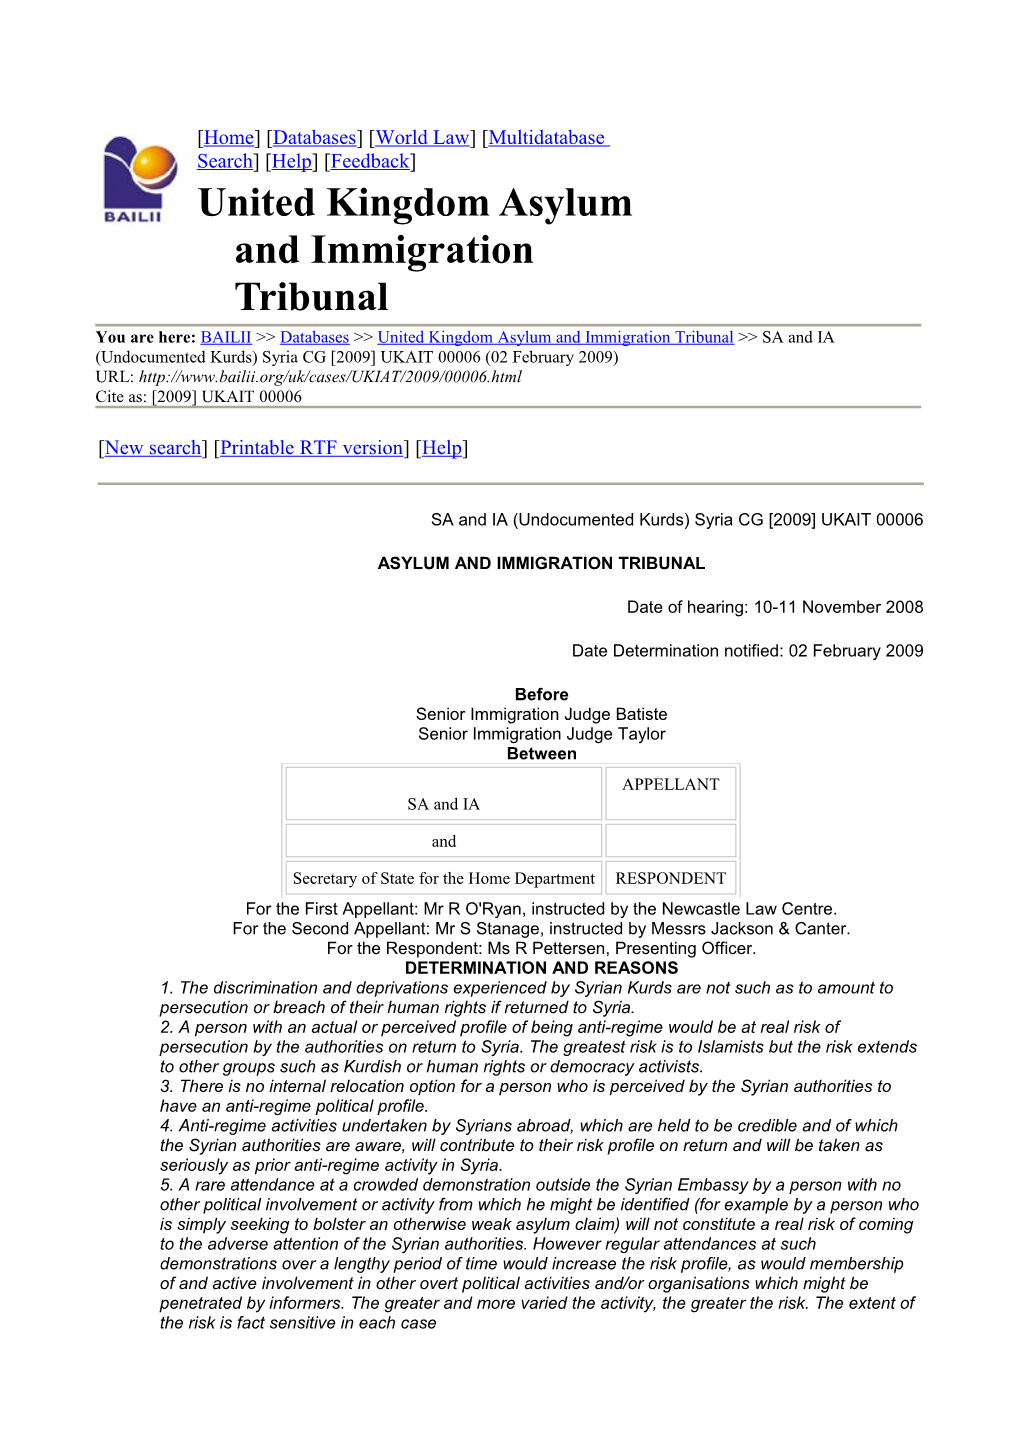 United Kingdom Asylum and Immigration Tribunal s1